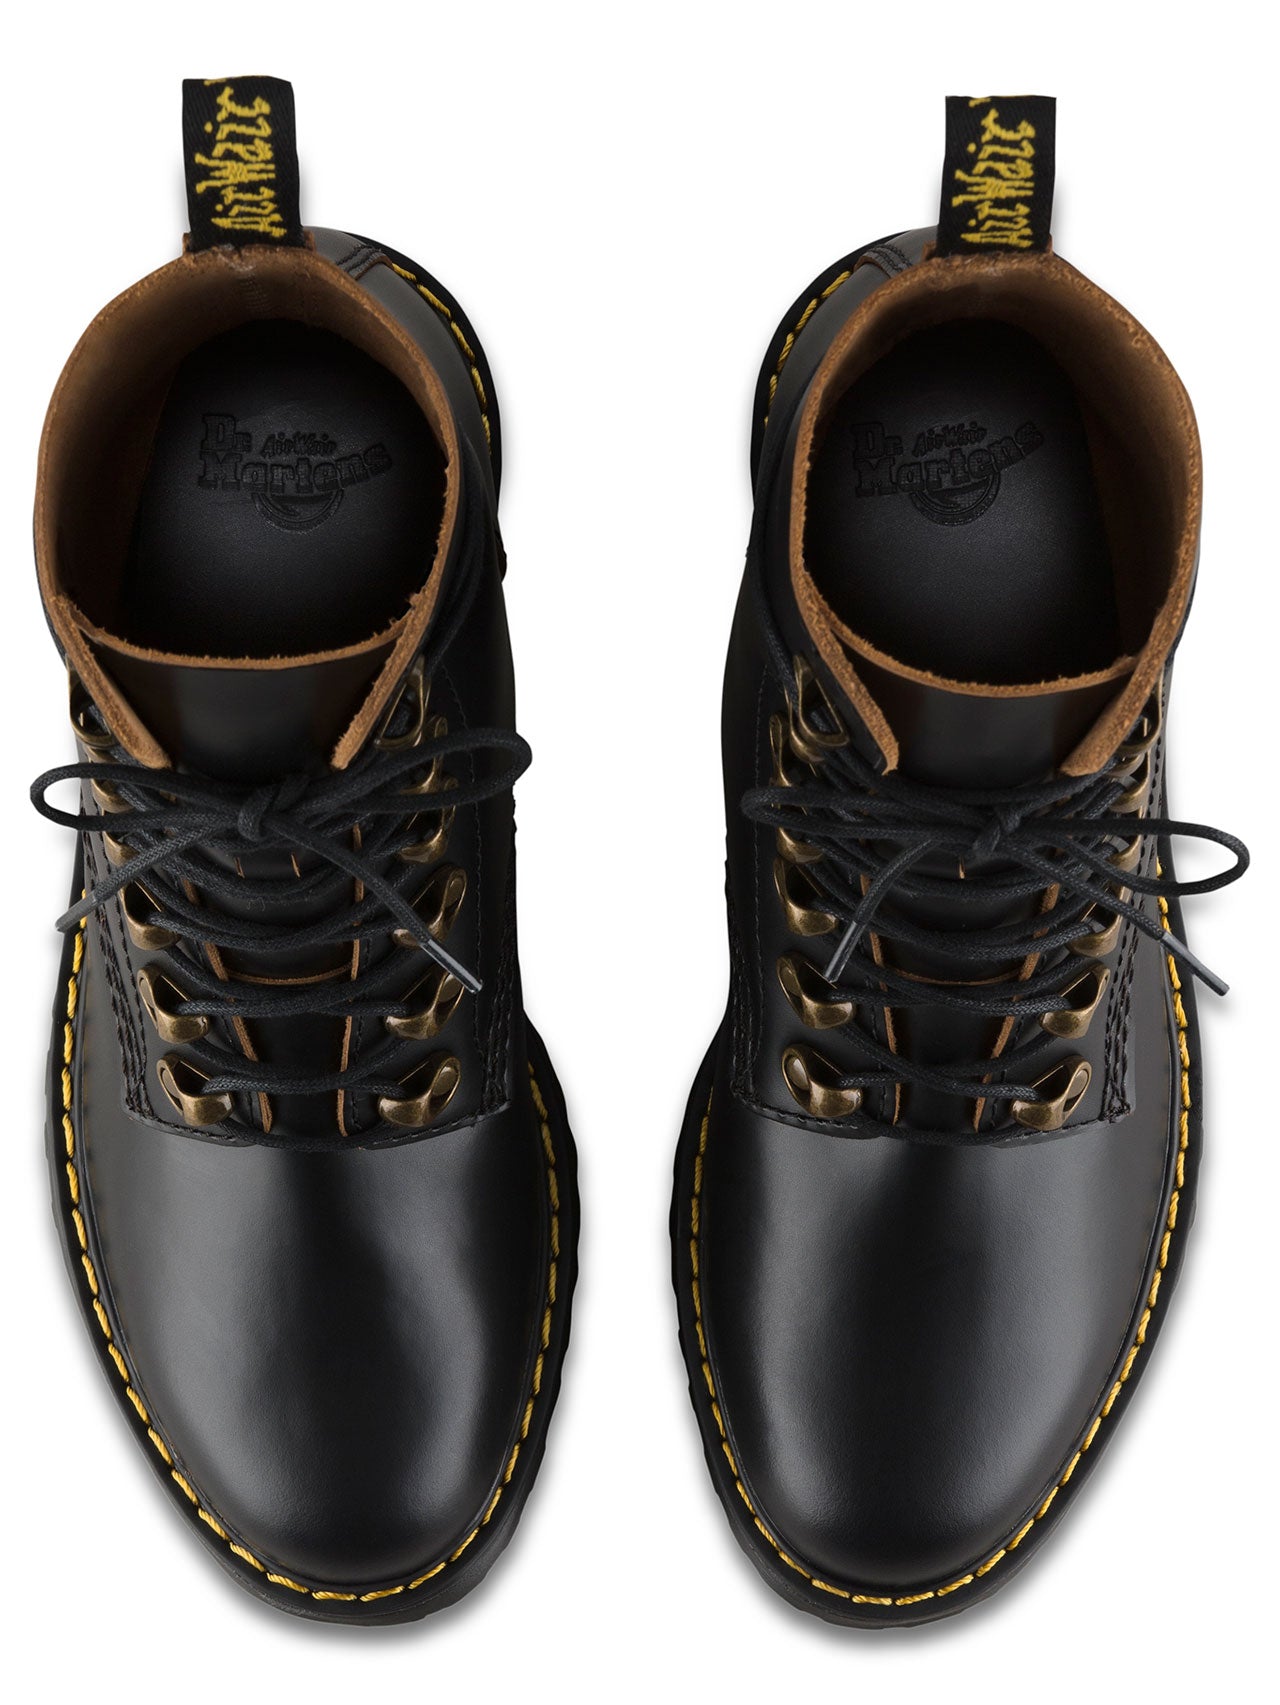 Dr. Martens Women's Leona Vintage Smooth Leather Heeled Boots 6 UK / Black